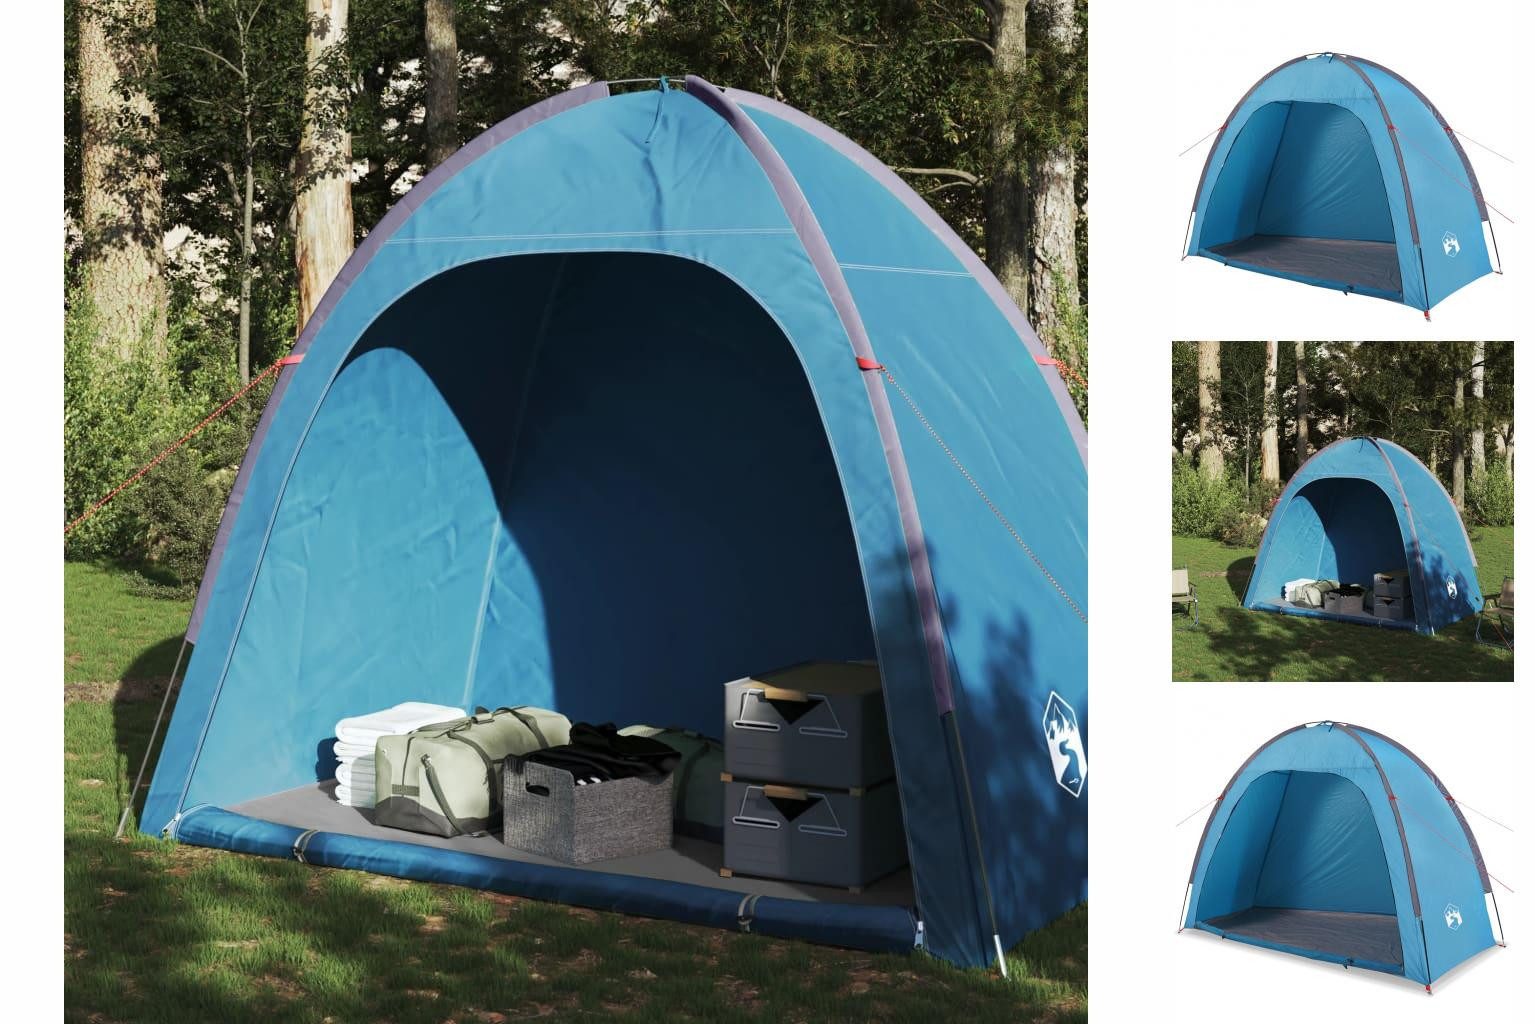 vidaXL Kuppelzelt Zelt Campingzelt Beistellzelt Blau Wasserdicht